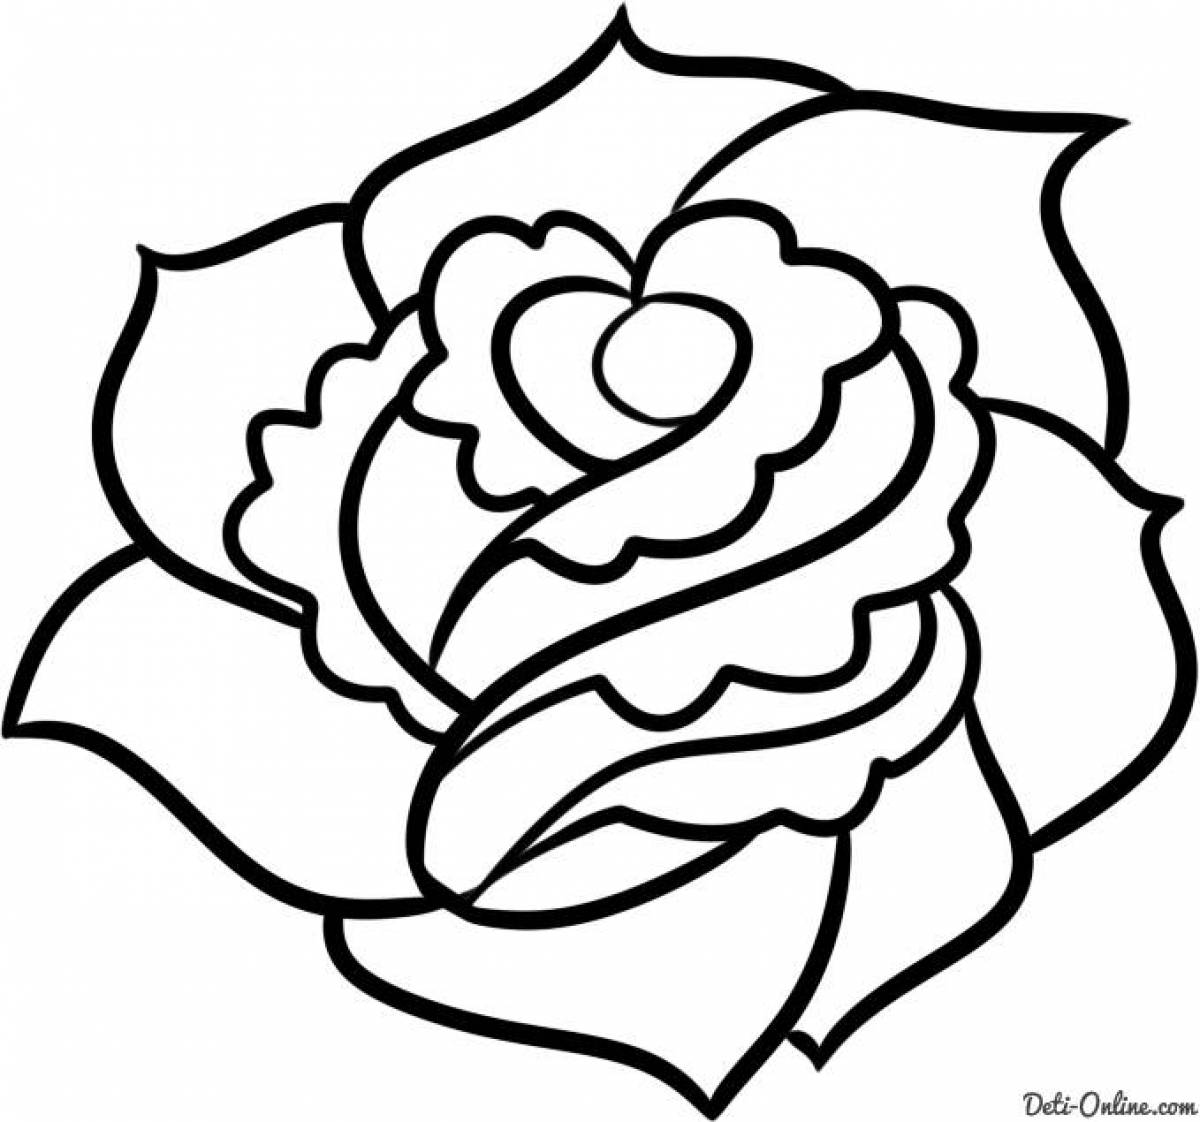 Joyful rose coloring for kids